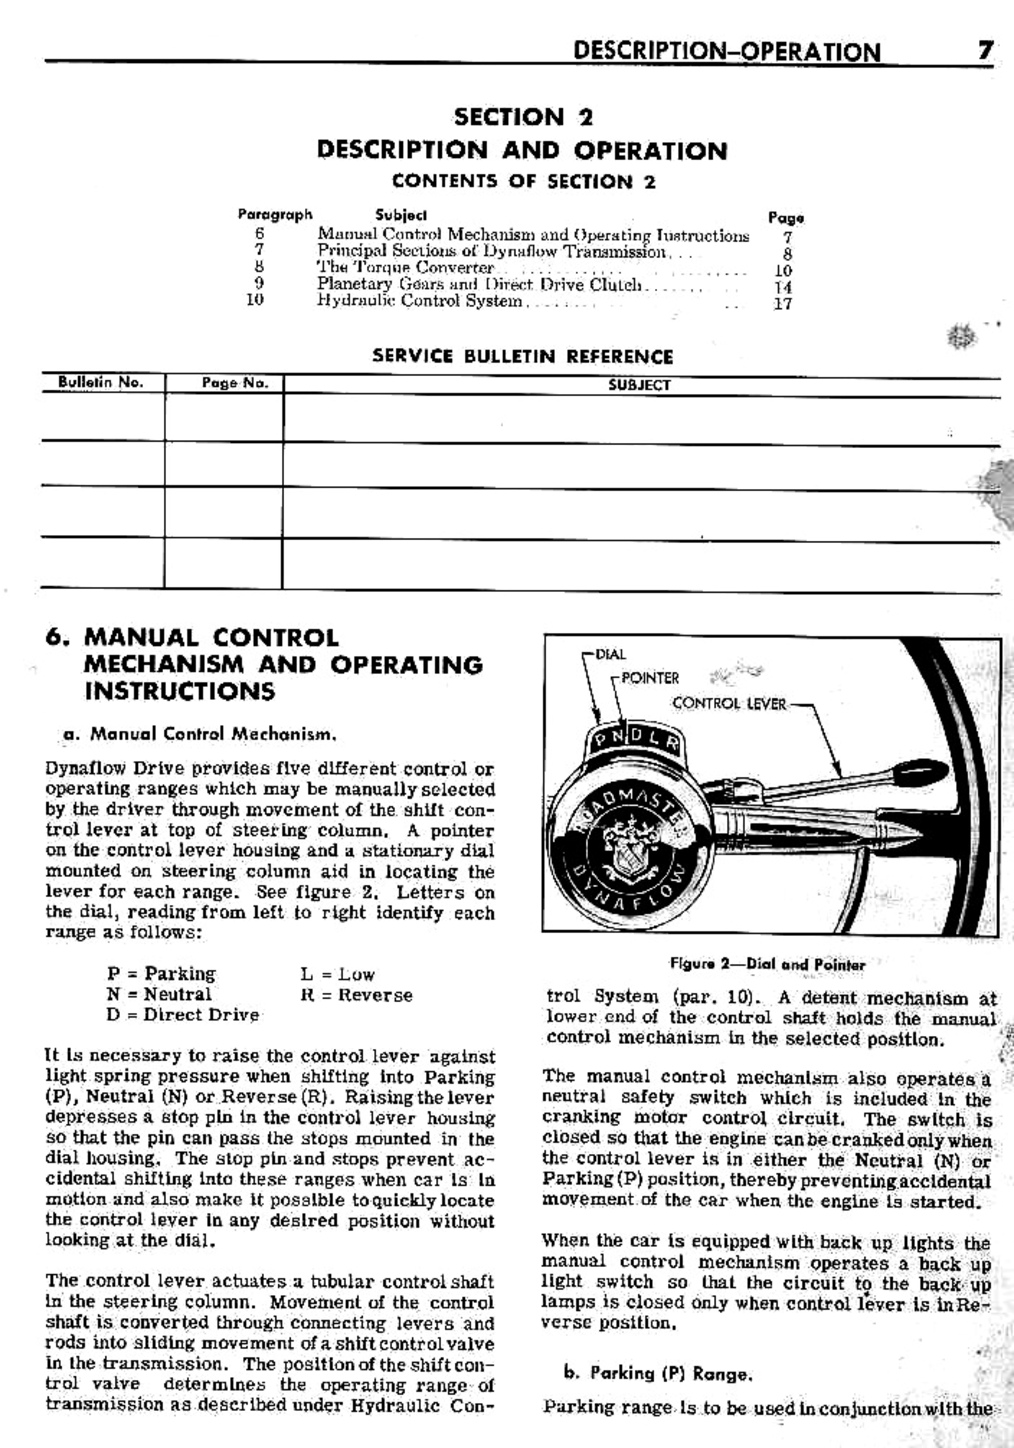 n_02 1948 Buick Transmission - Descr & Oper-001-001.jpg